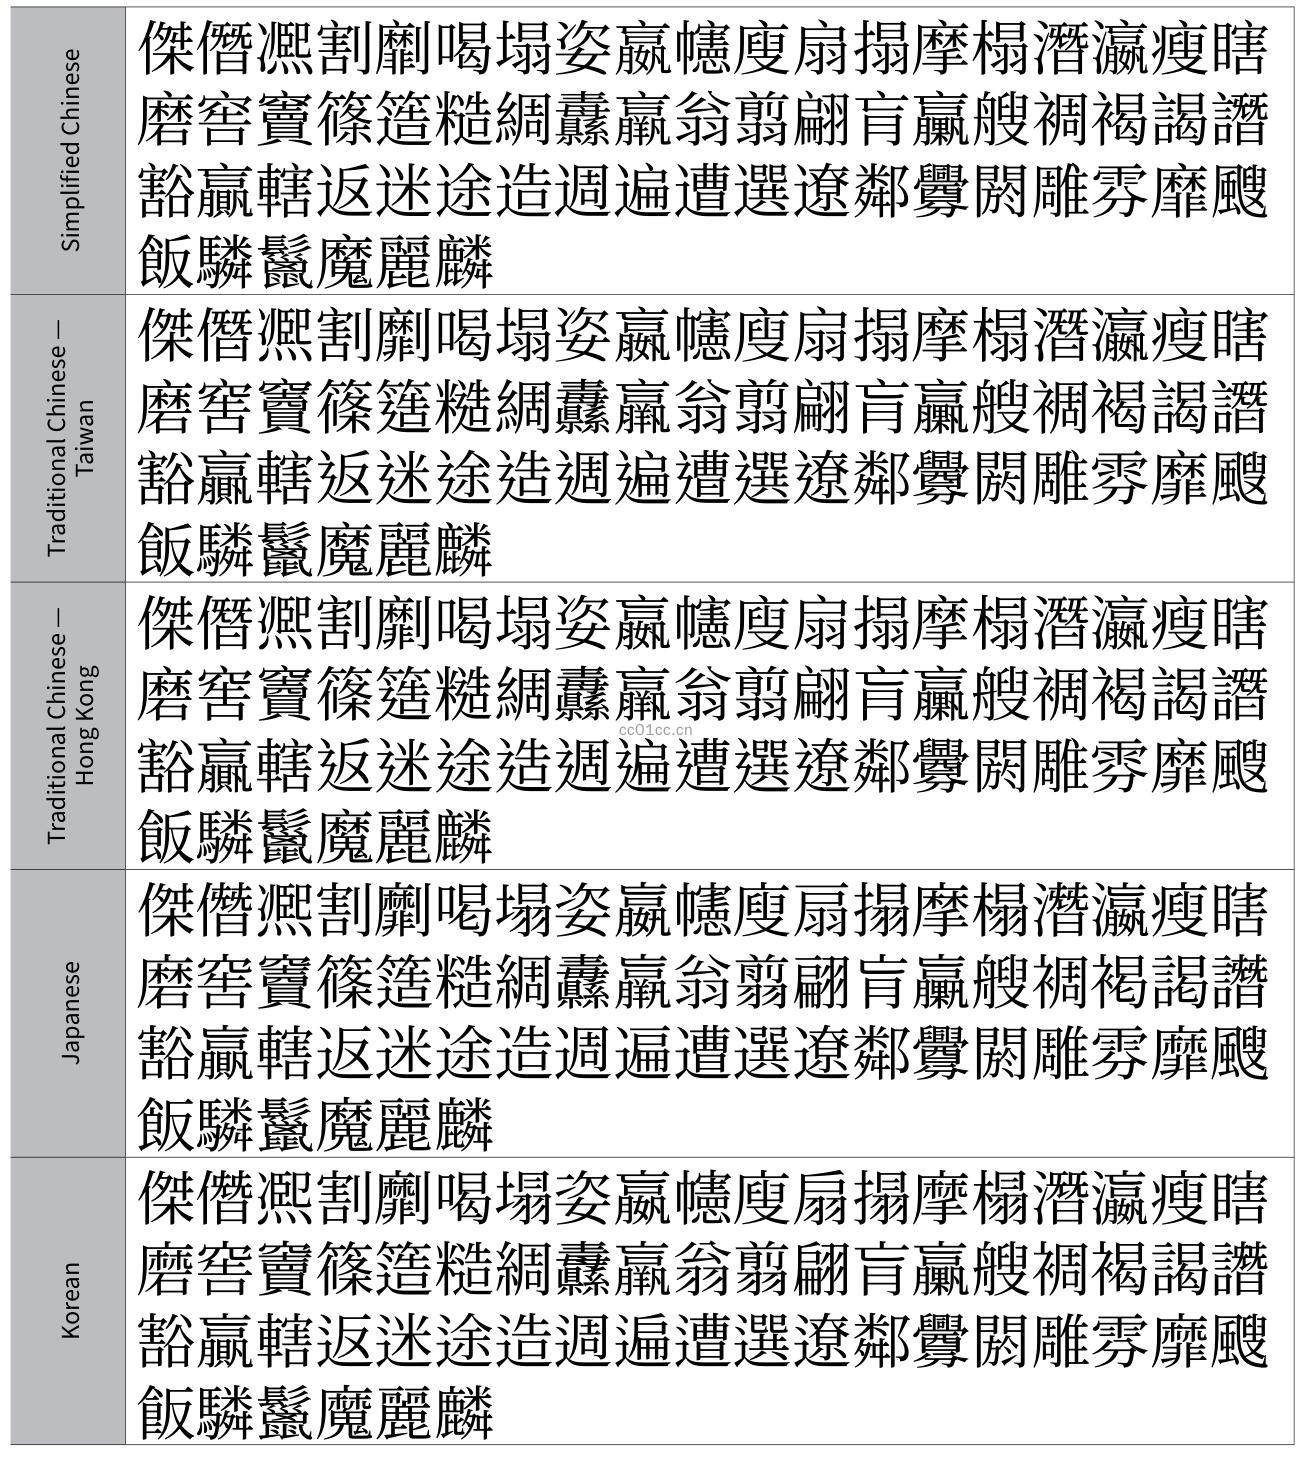 source-han-serif-diff-type-region-63-202403212235191